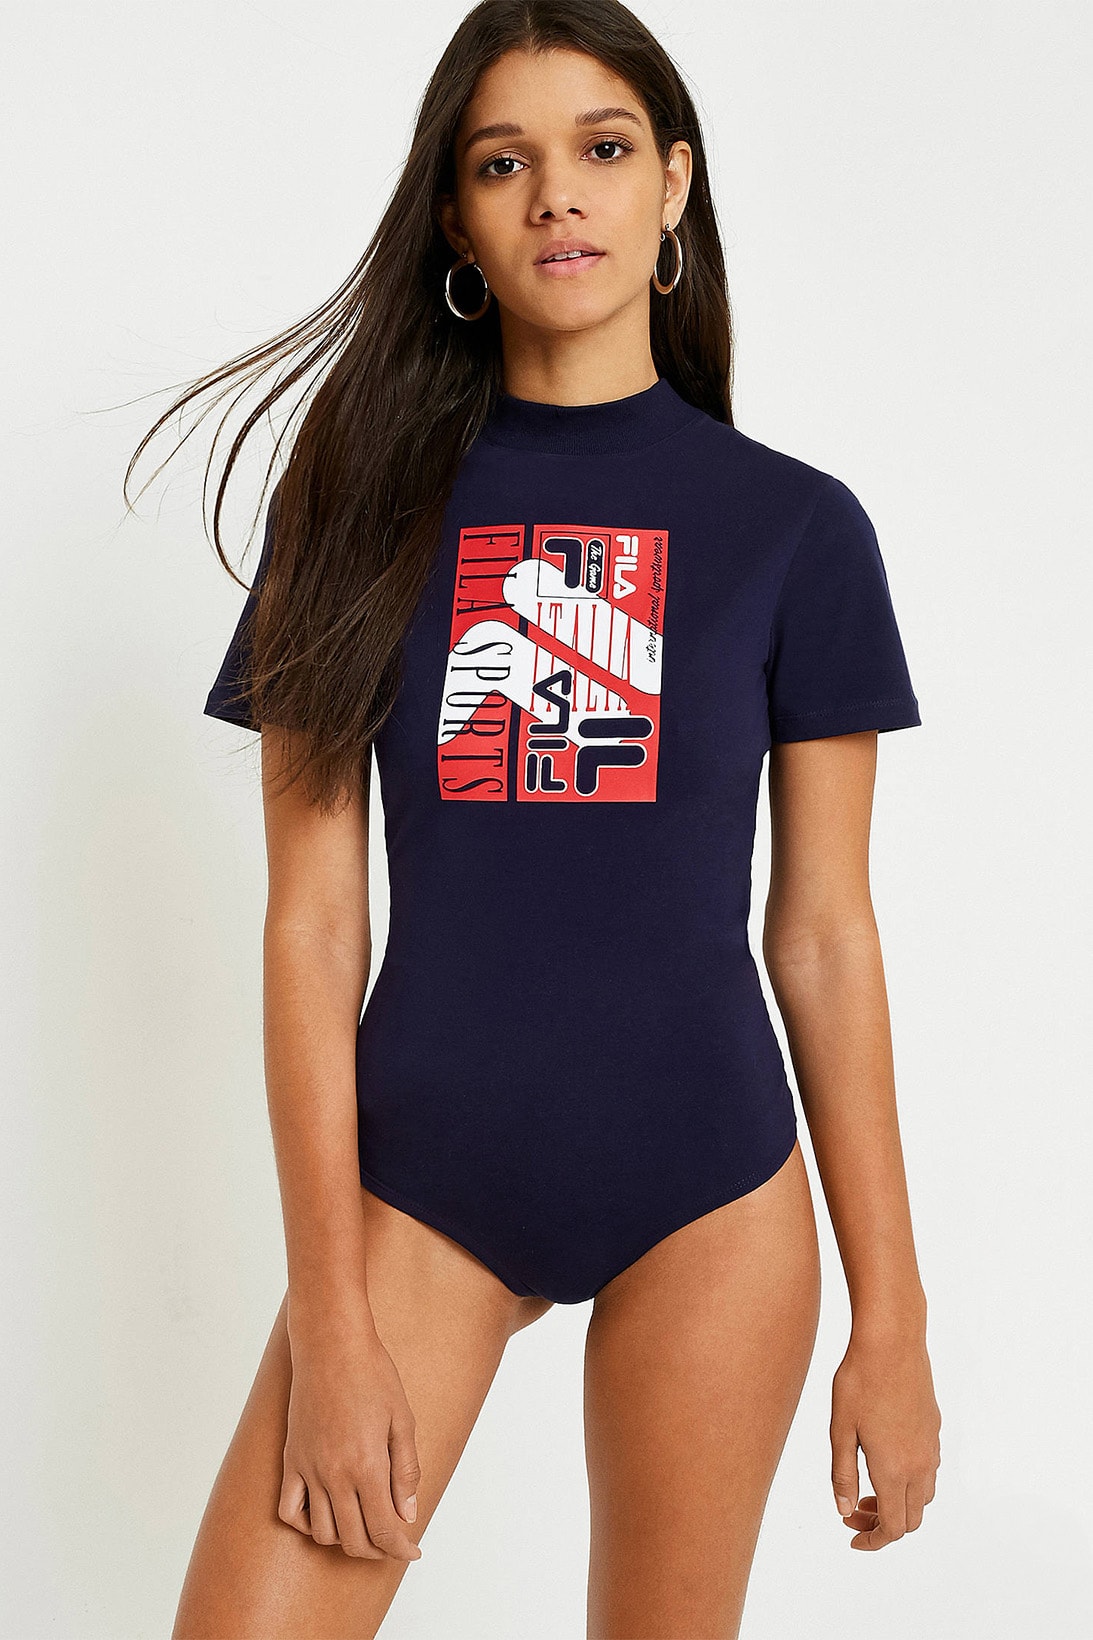 FILA womens bodysuit retro vintage sportswear logo navy urban outfitters